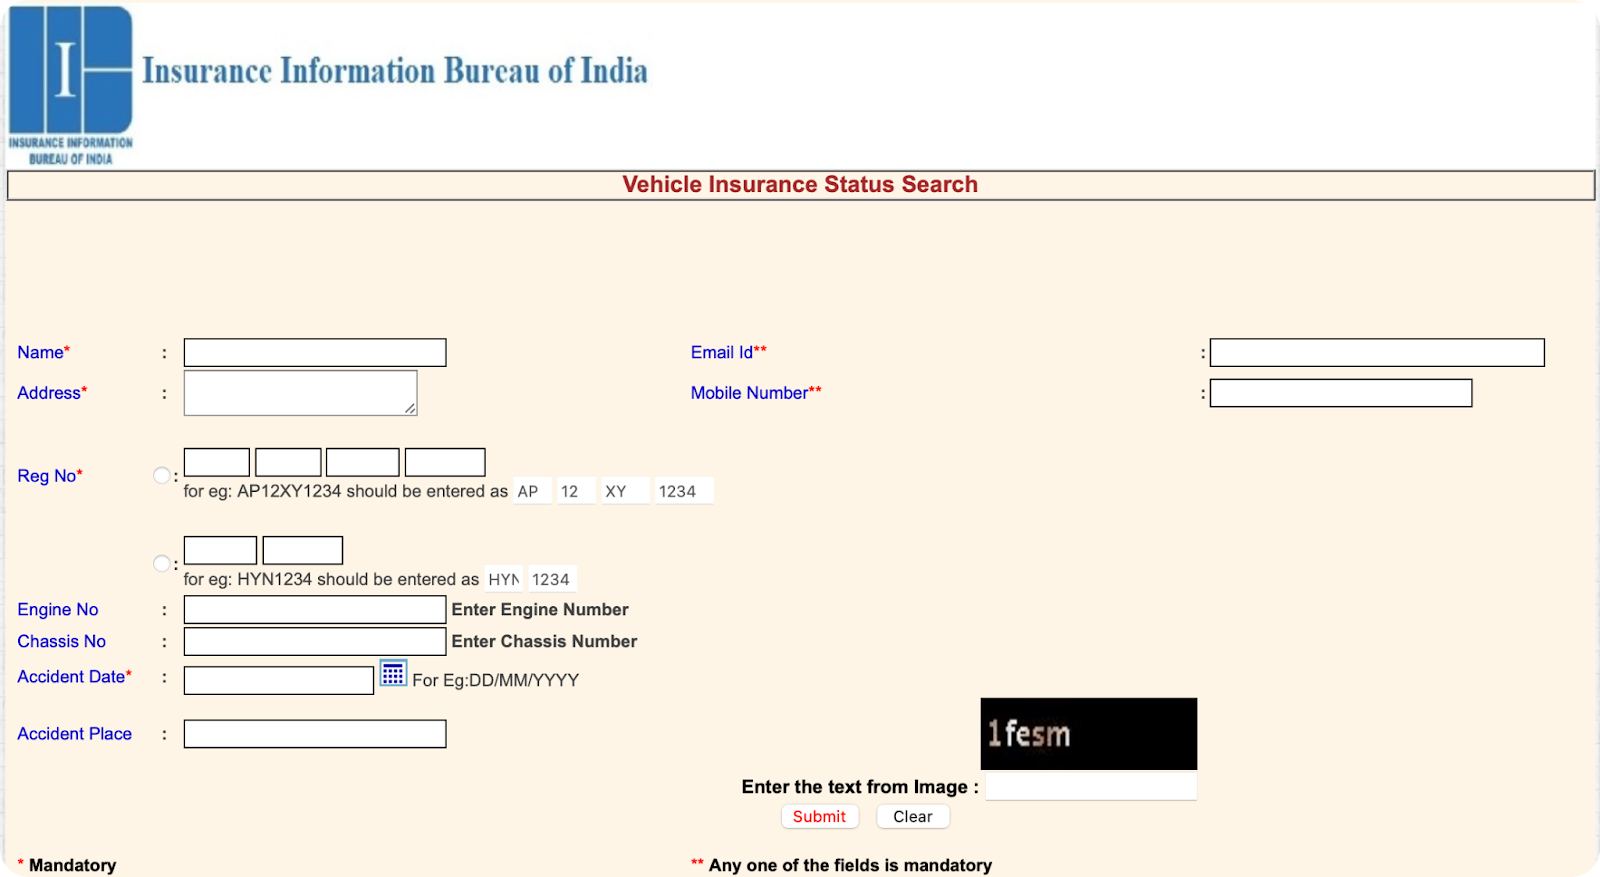 Checking Vehicle Insurance Status Online on IIB Portal